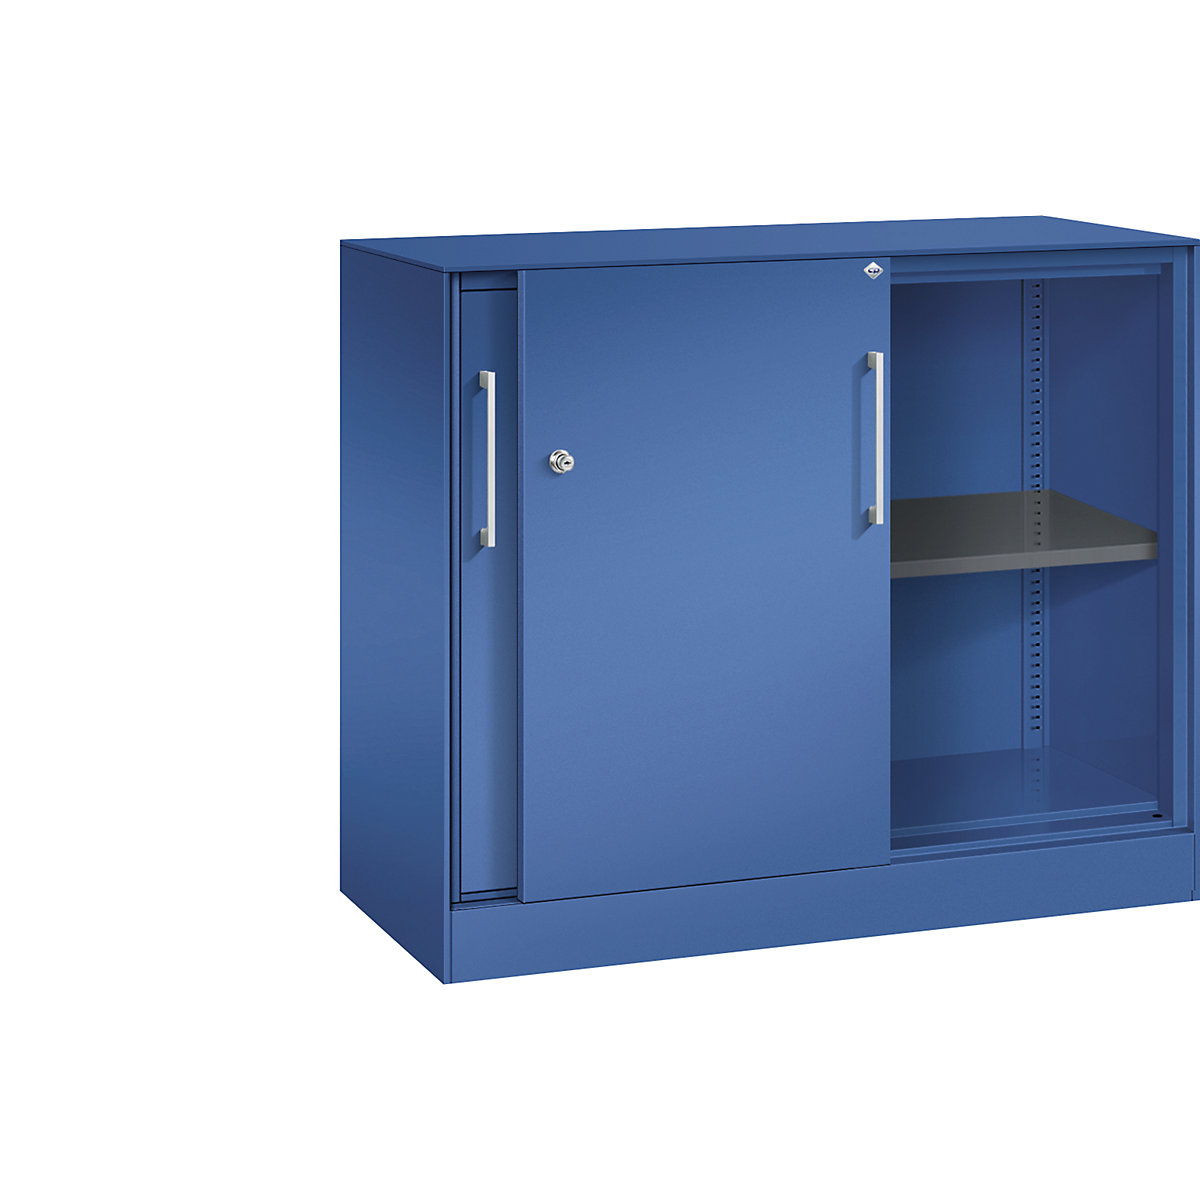 C+P – Skříň s posuvnými dveřmi ASISTO, výška 897 mm, šířka 1000 mm, enciánová modrá/enciánová modrá